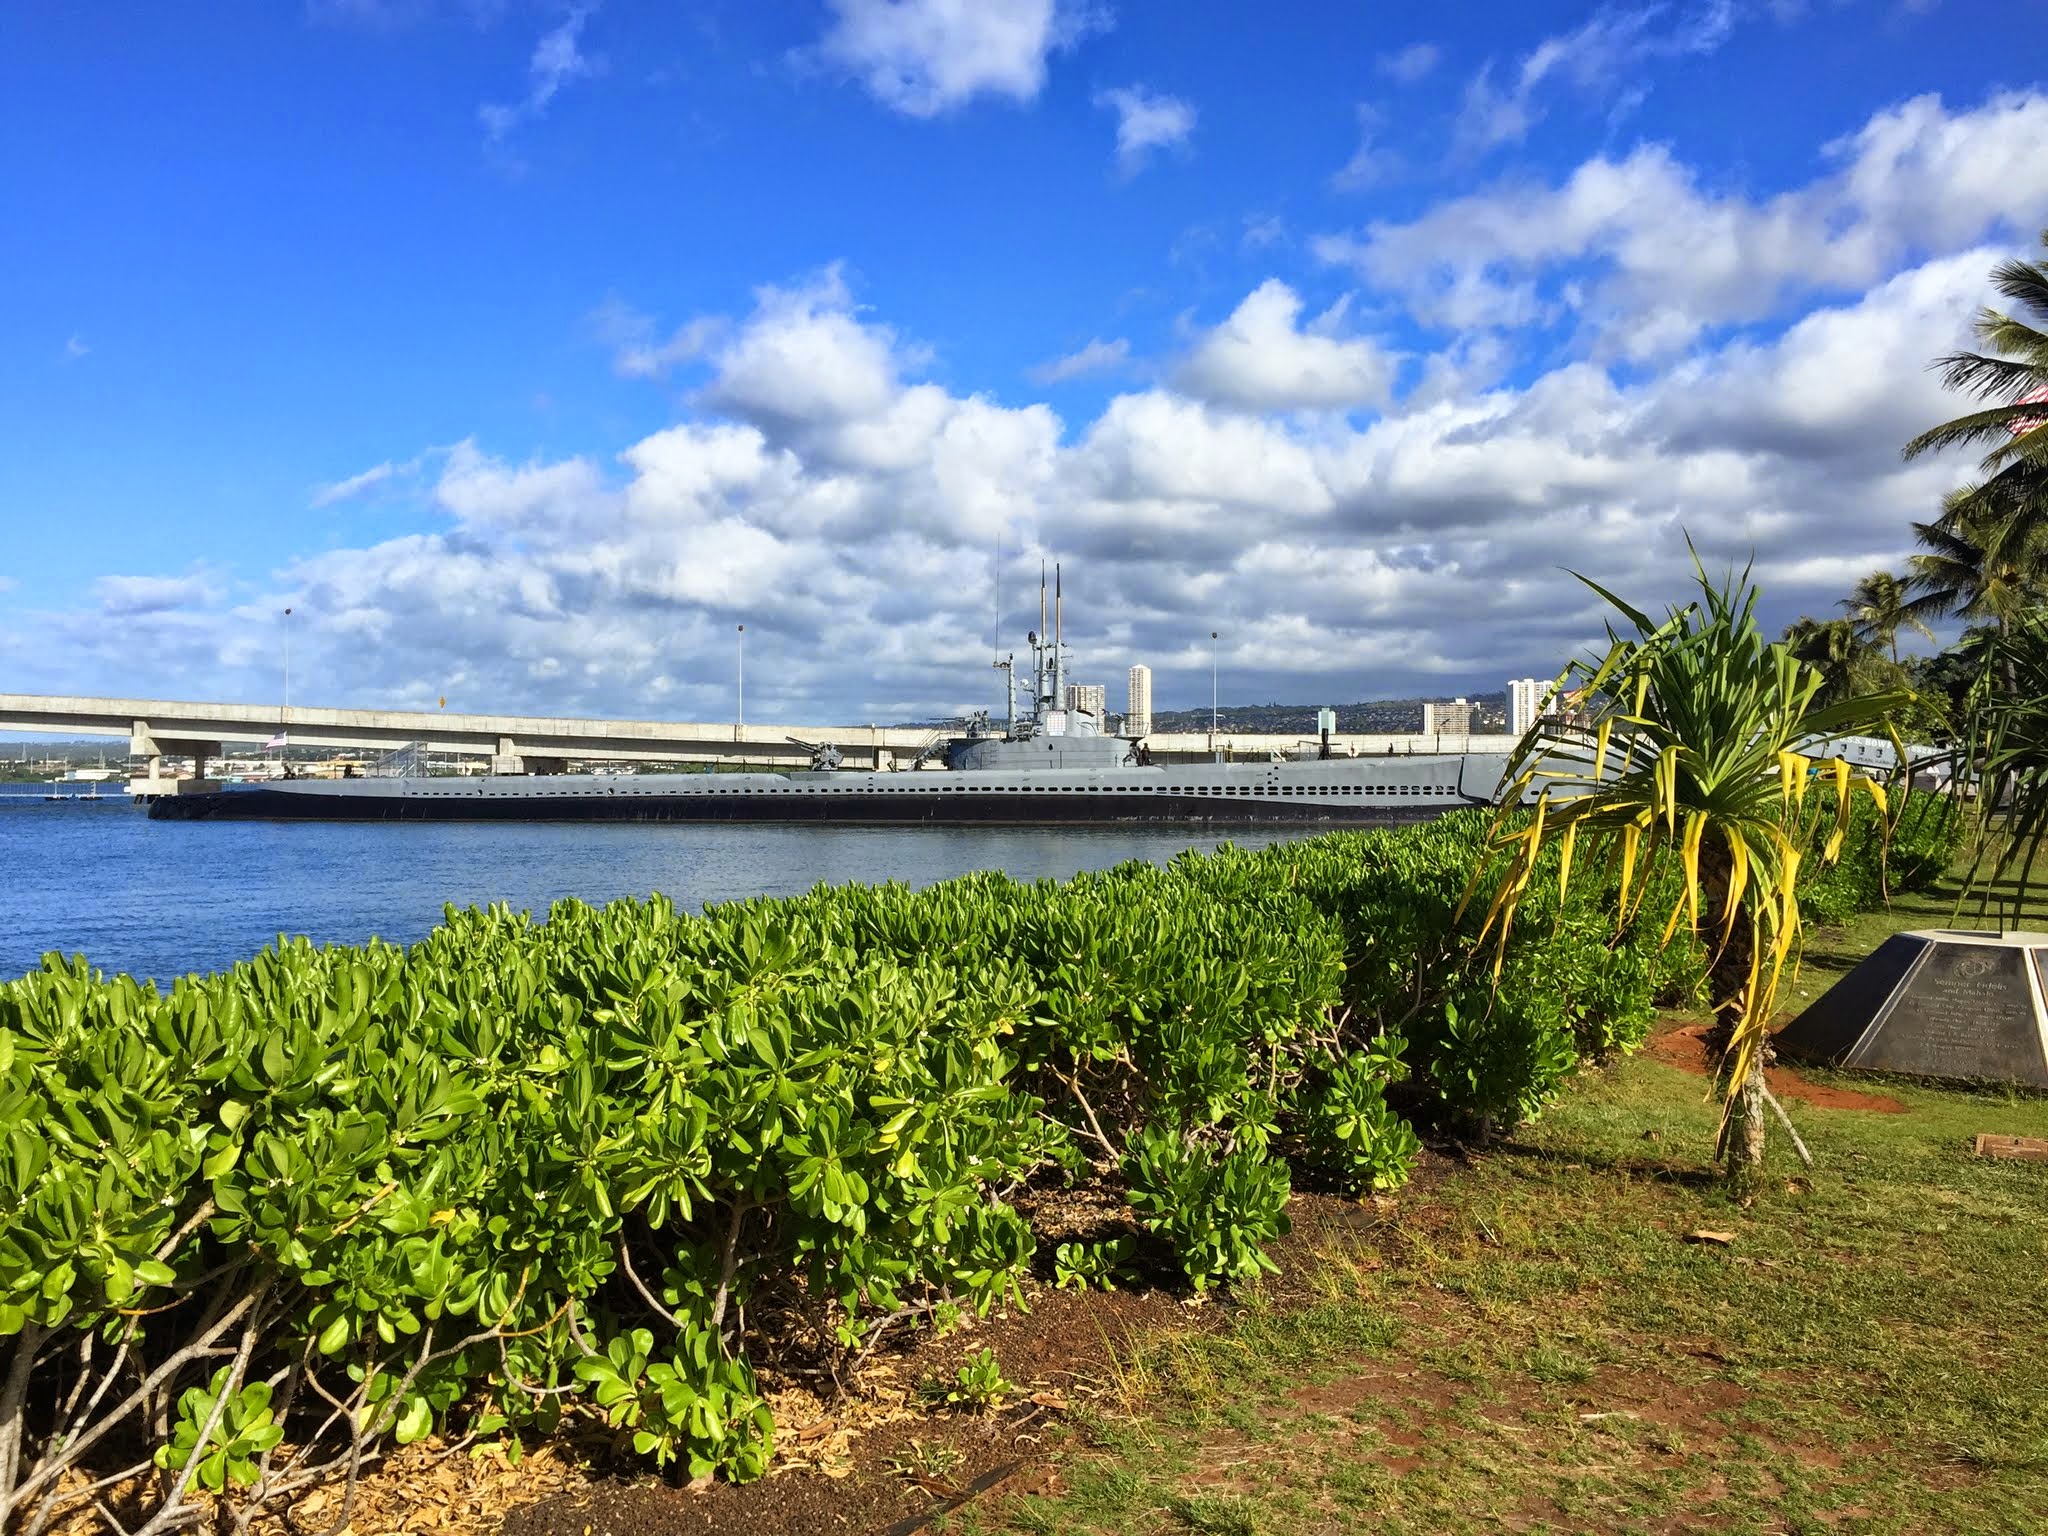 Museum ship Bowfin, Pearl Harbor, Hawaii, United States, 30 Nov 2014